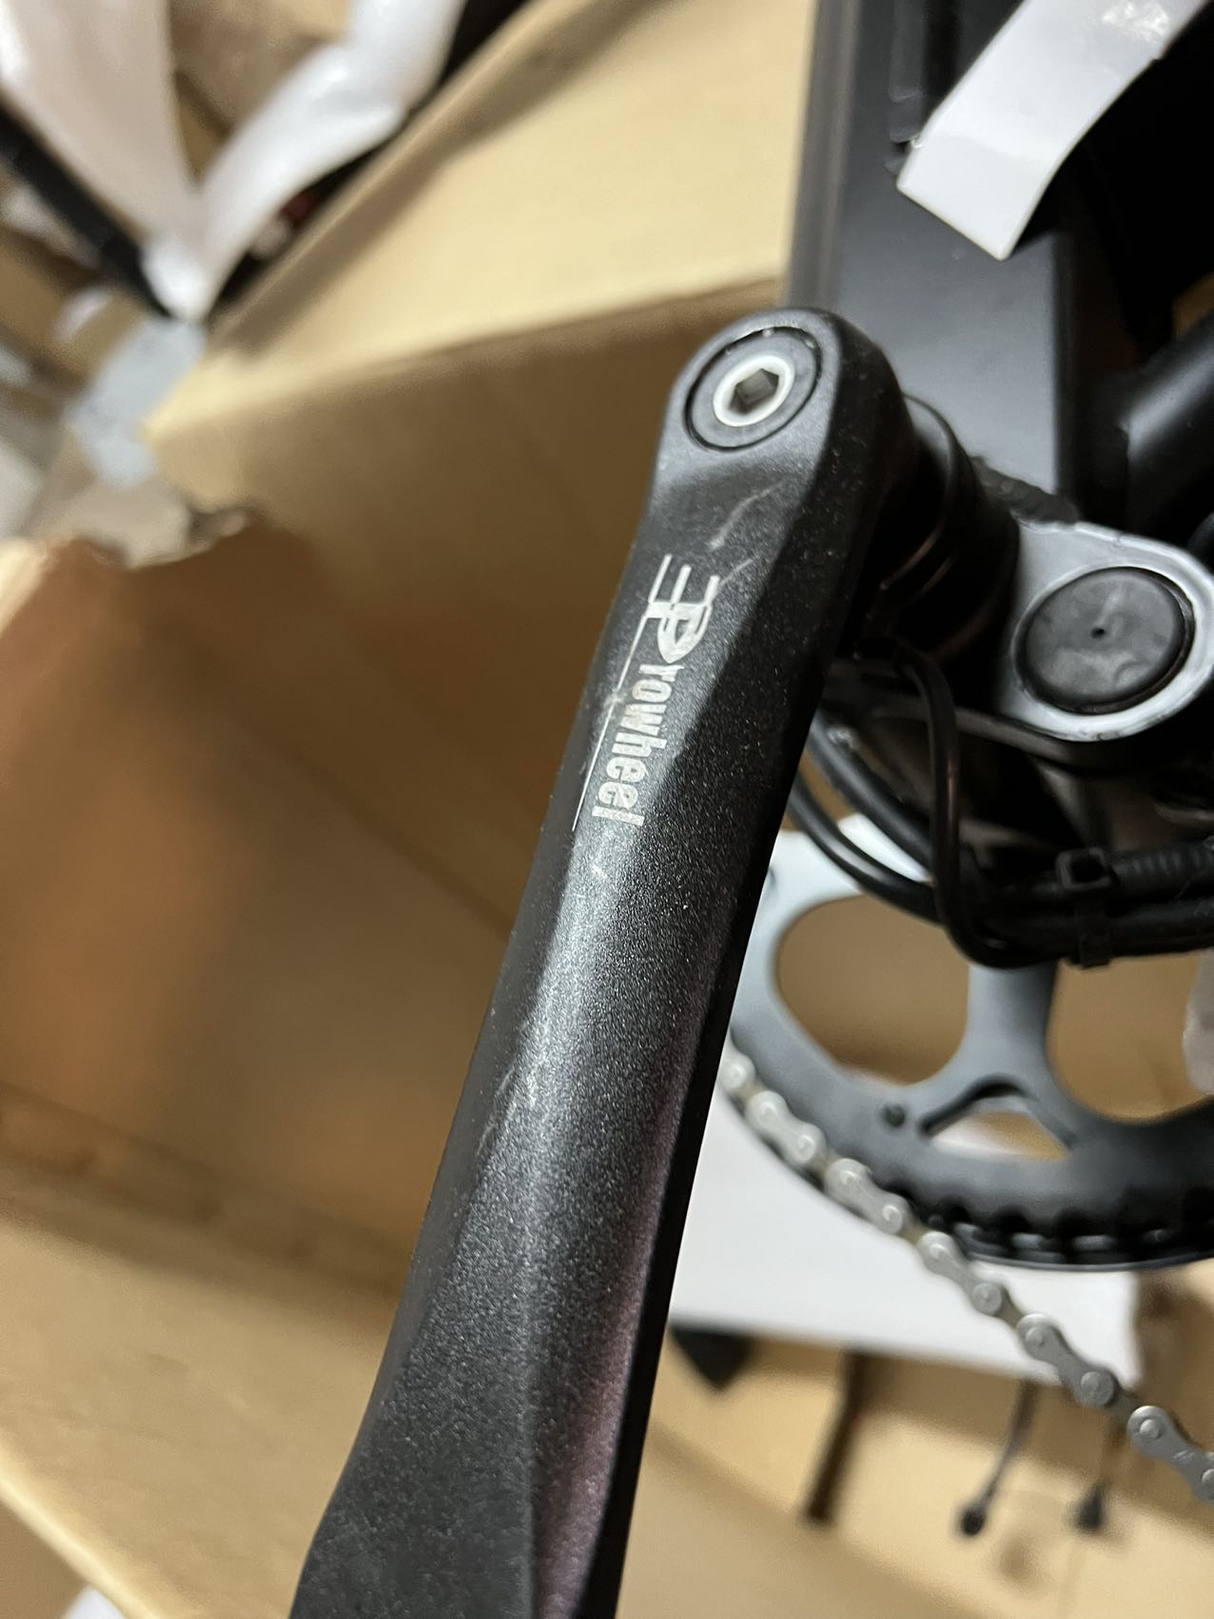 Elektro fahrrad WL01-Special bietet Ebike an